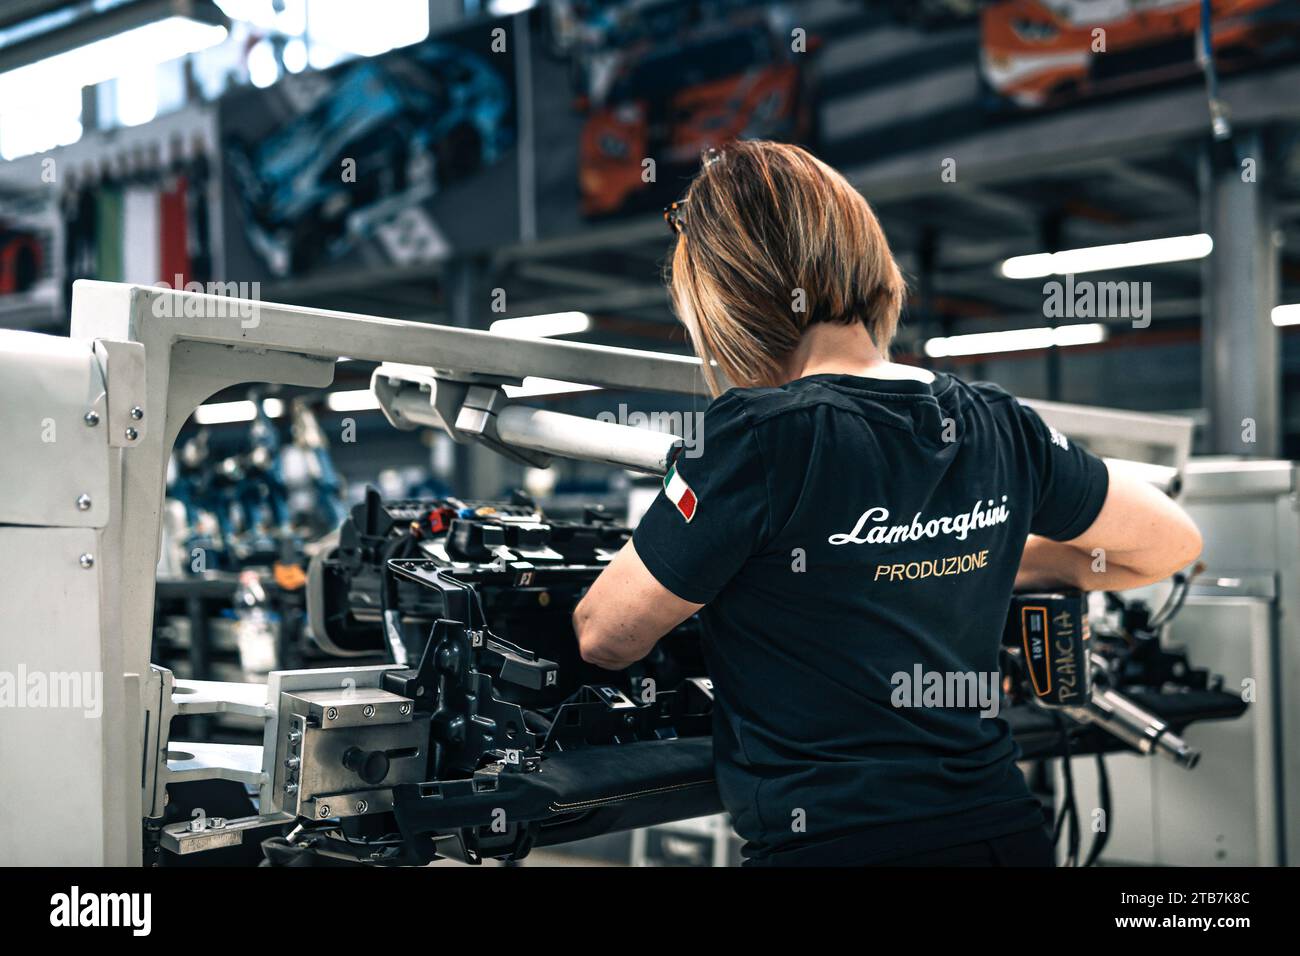 Italy, Sant’Agata Bolognese, 2018/04/13: Automobili Lamborghini’s plant. Women working in the workshop Stock Photo